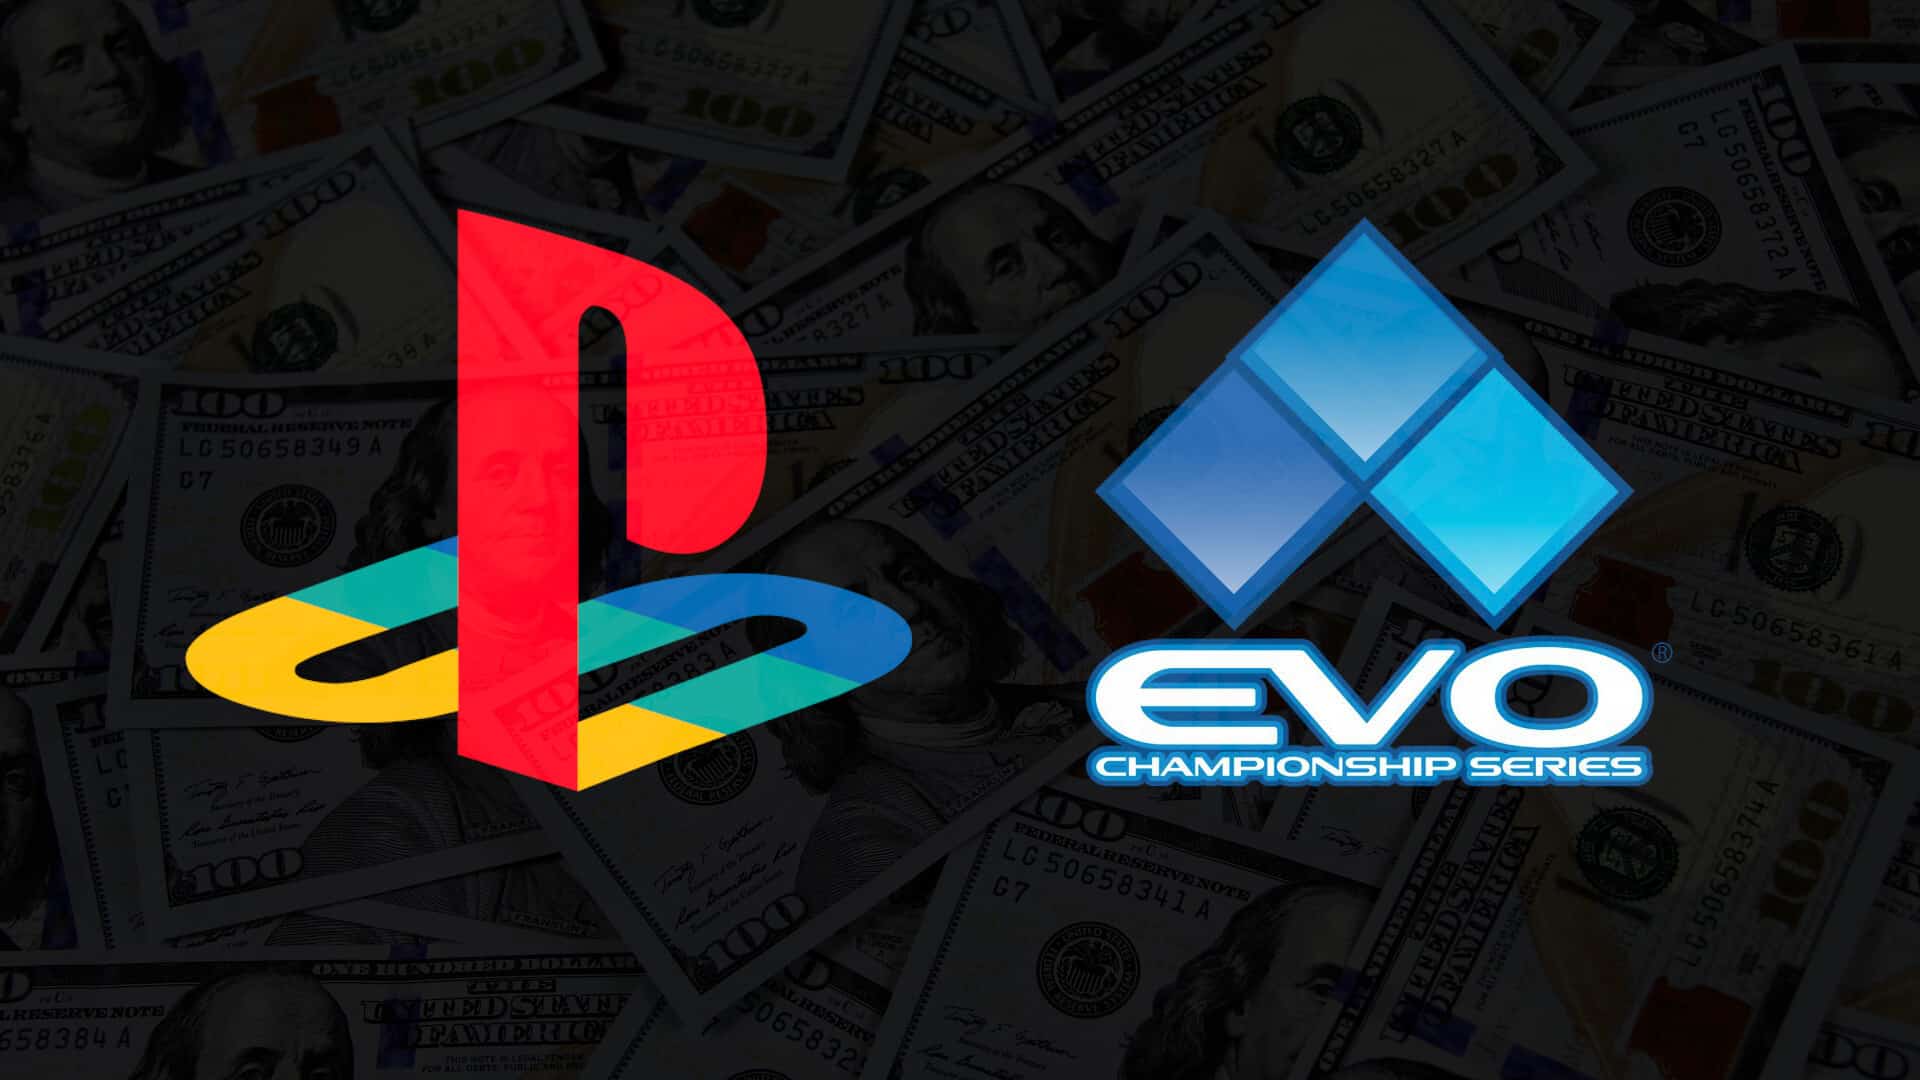 PlayStation RTS buy EVO tournament series